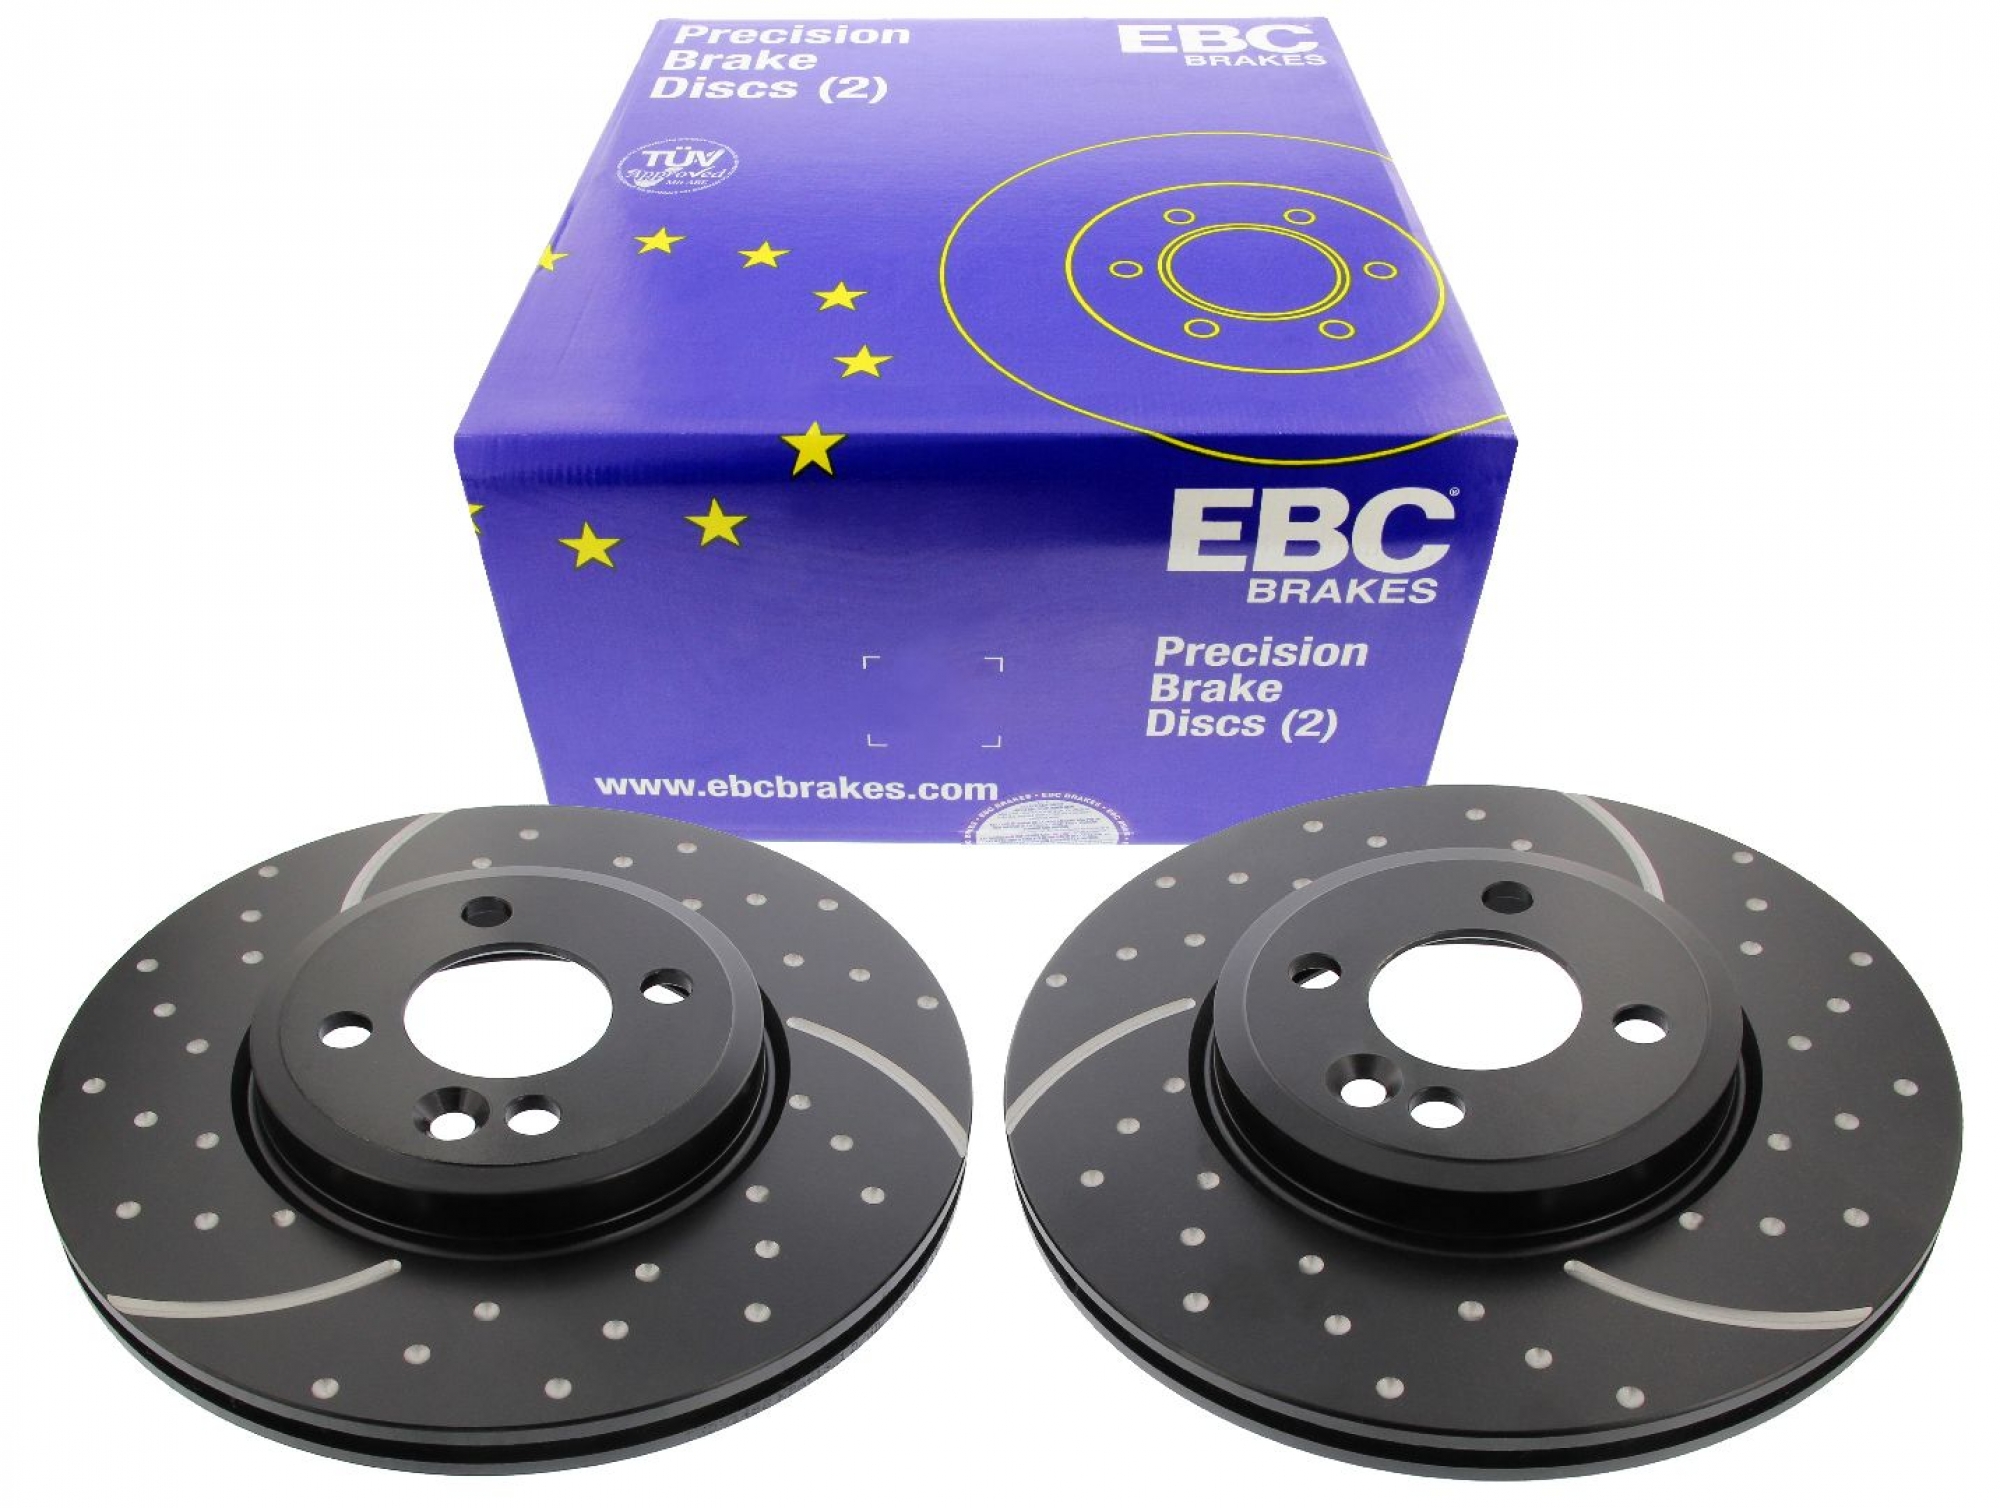 EBC-Bremsscheiben, Turbo Groove Disc Black (2-teilig), VA, Mini Mini